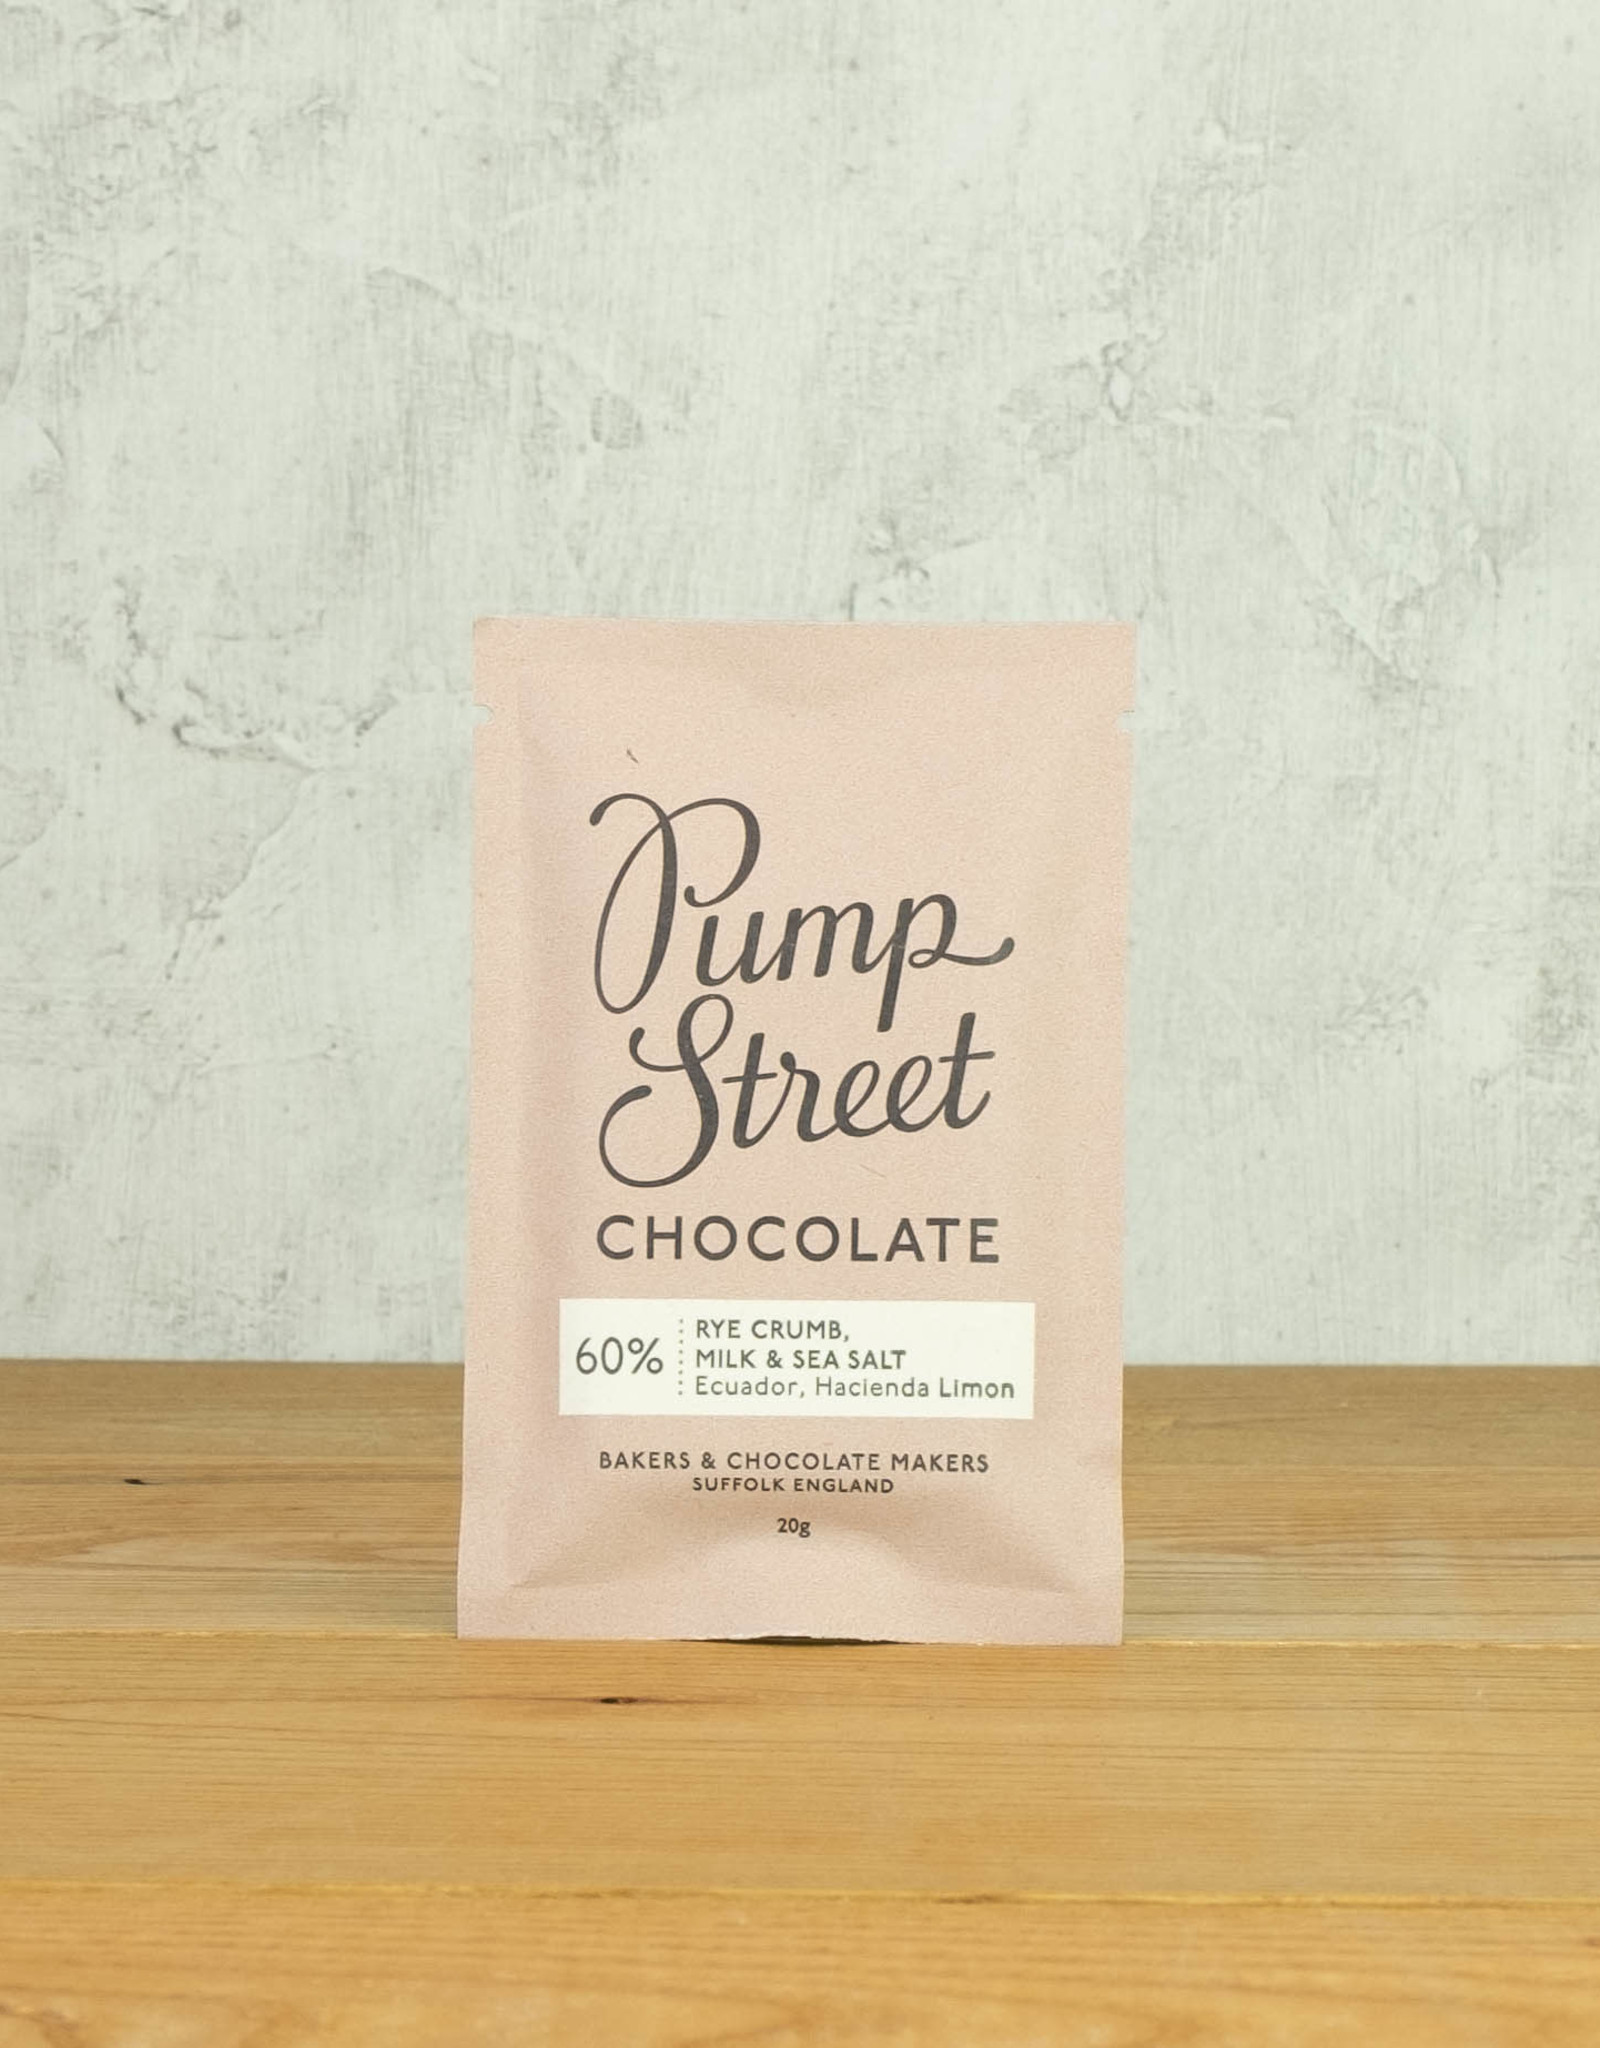 Pump Street Chocolate Rye Crumb, Milk & Sea Salt 60% Mini